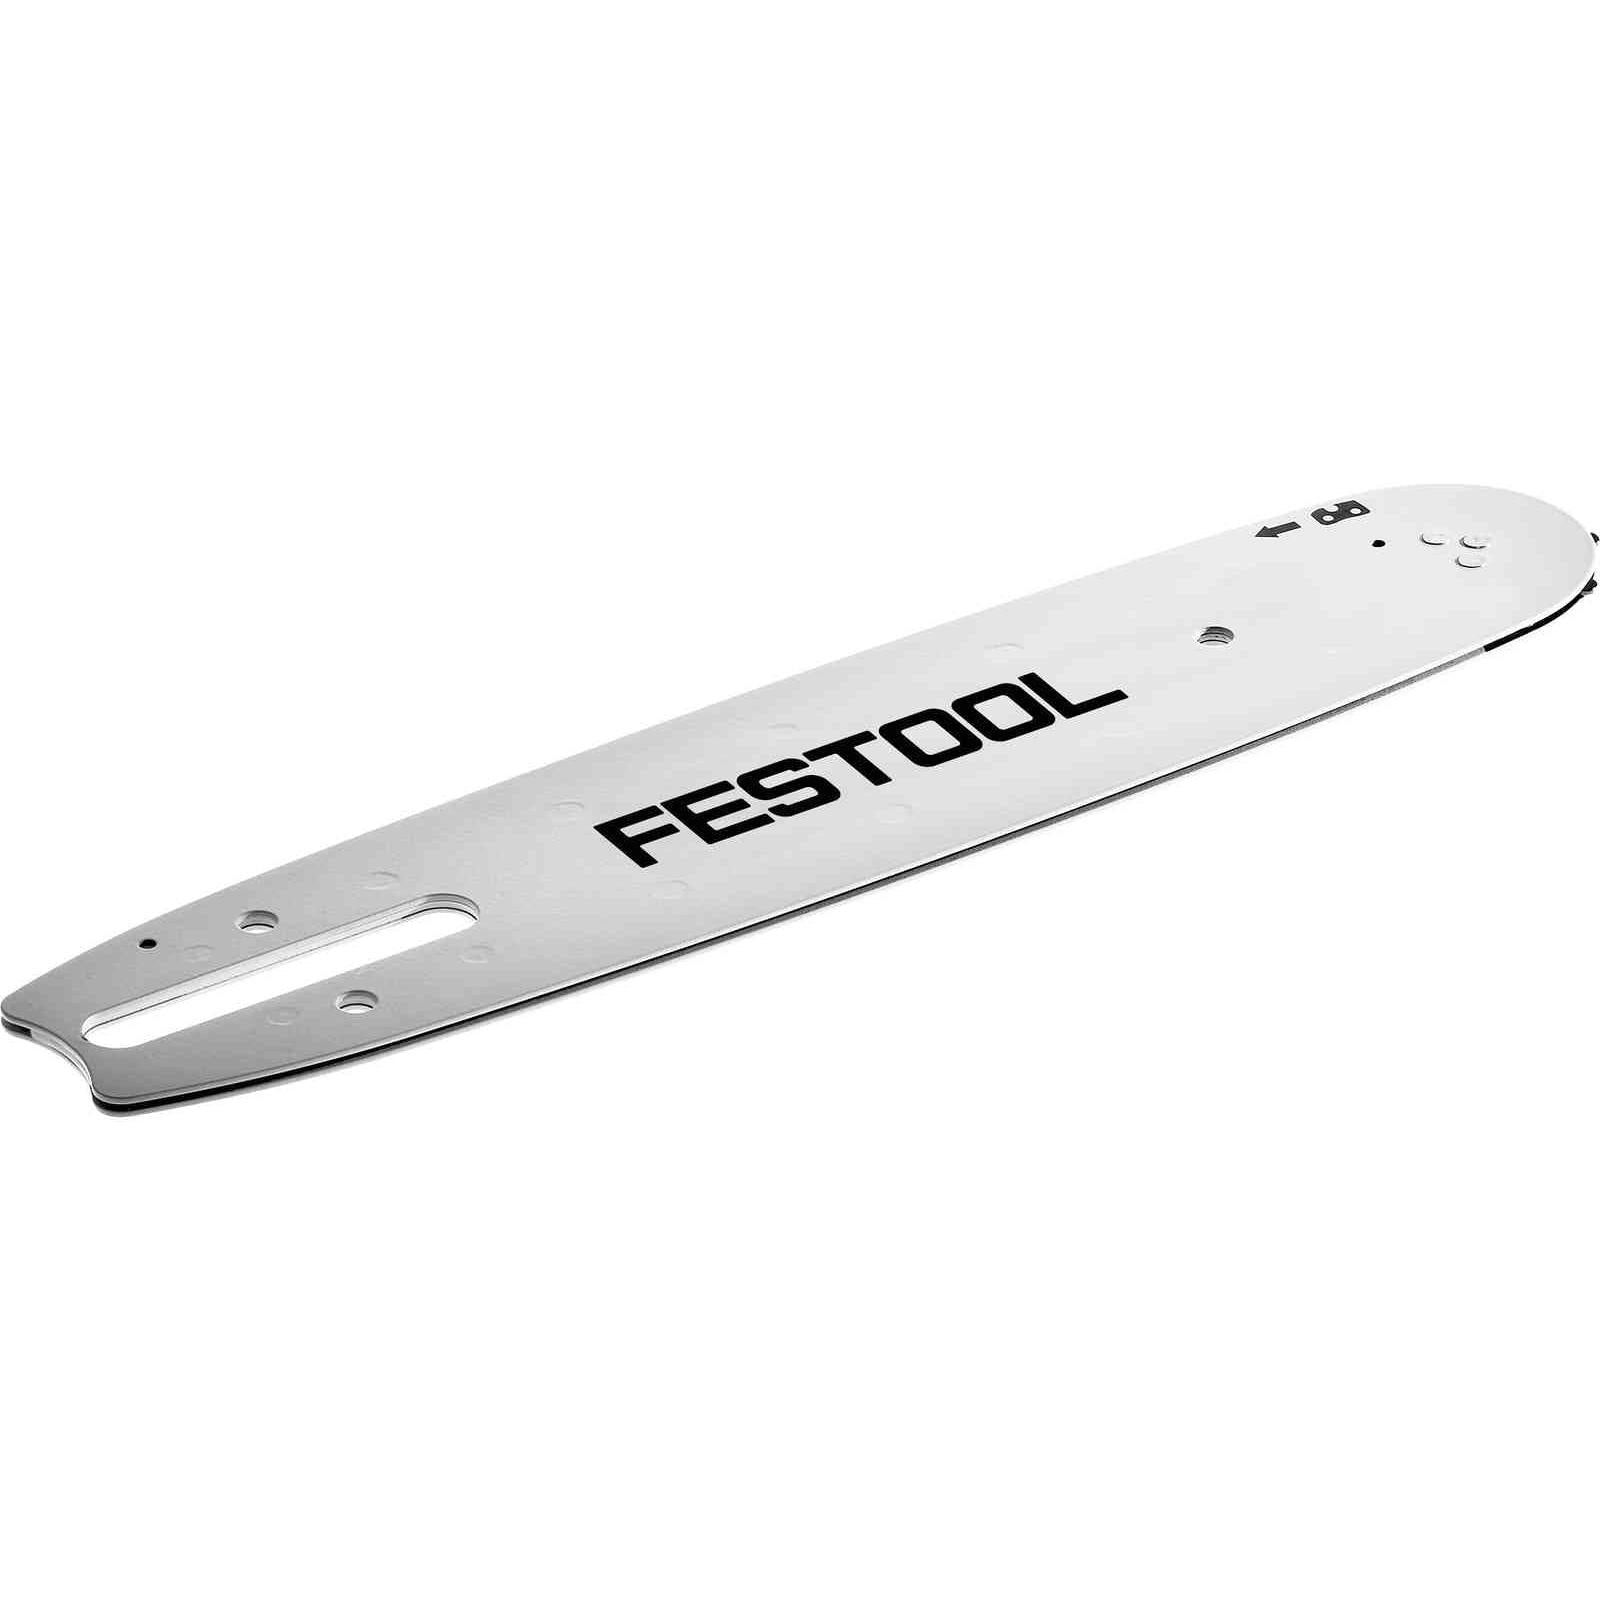 Festool Blade GB 10"-SSU 200 769066 Power Tool Services